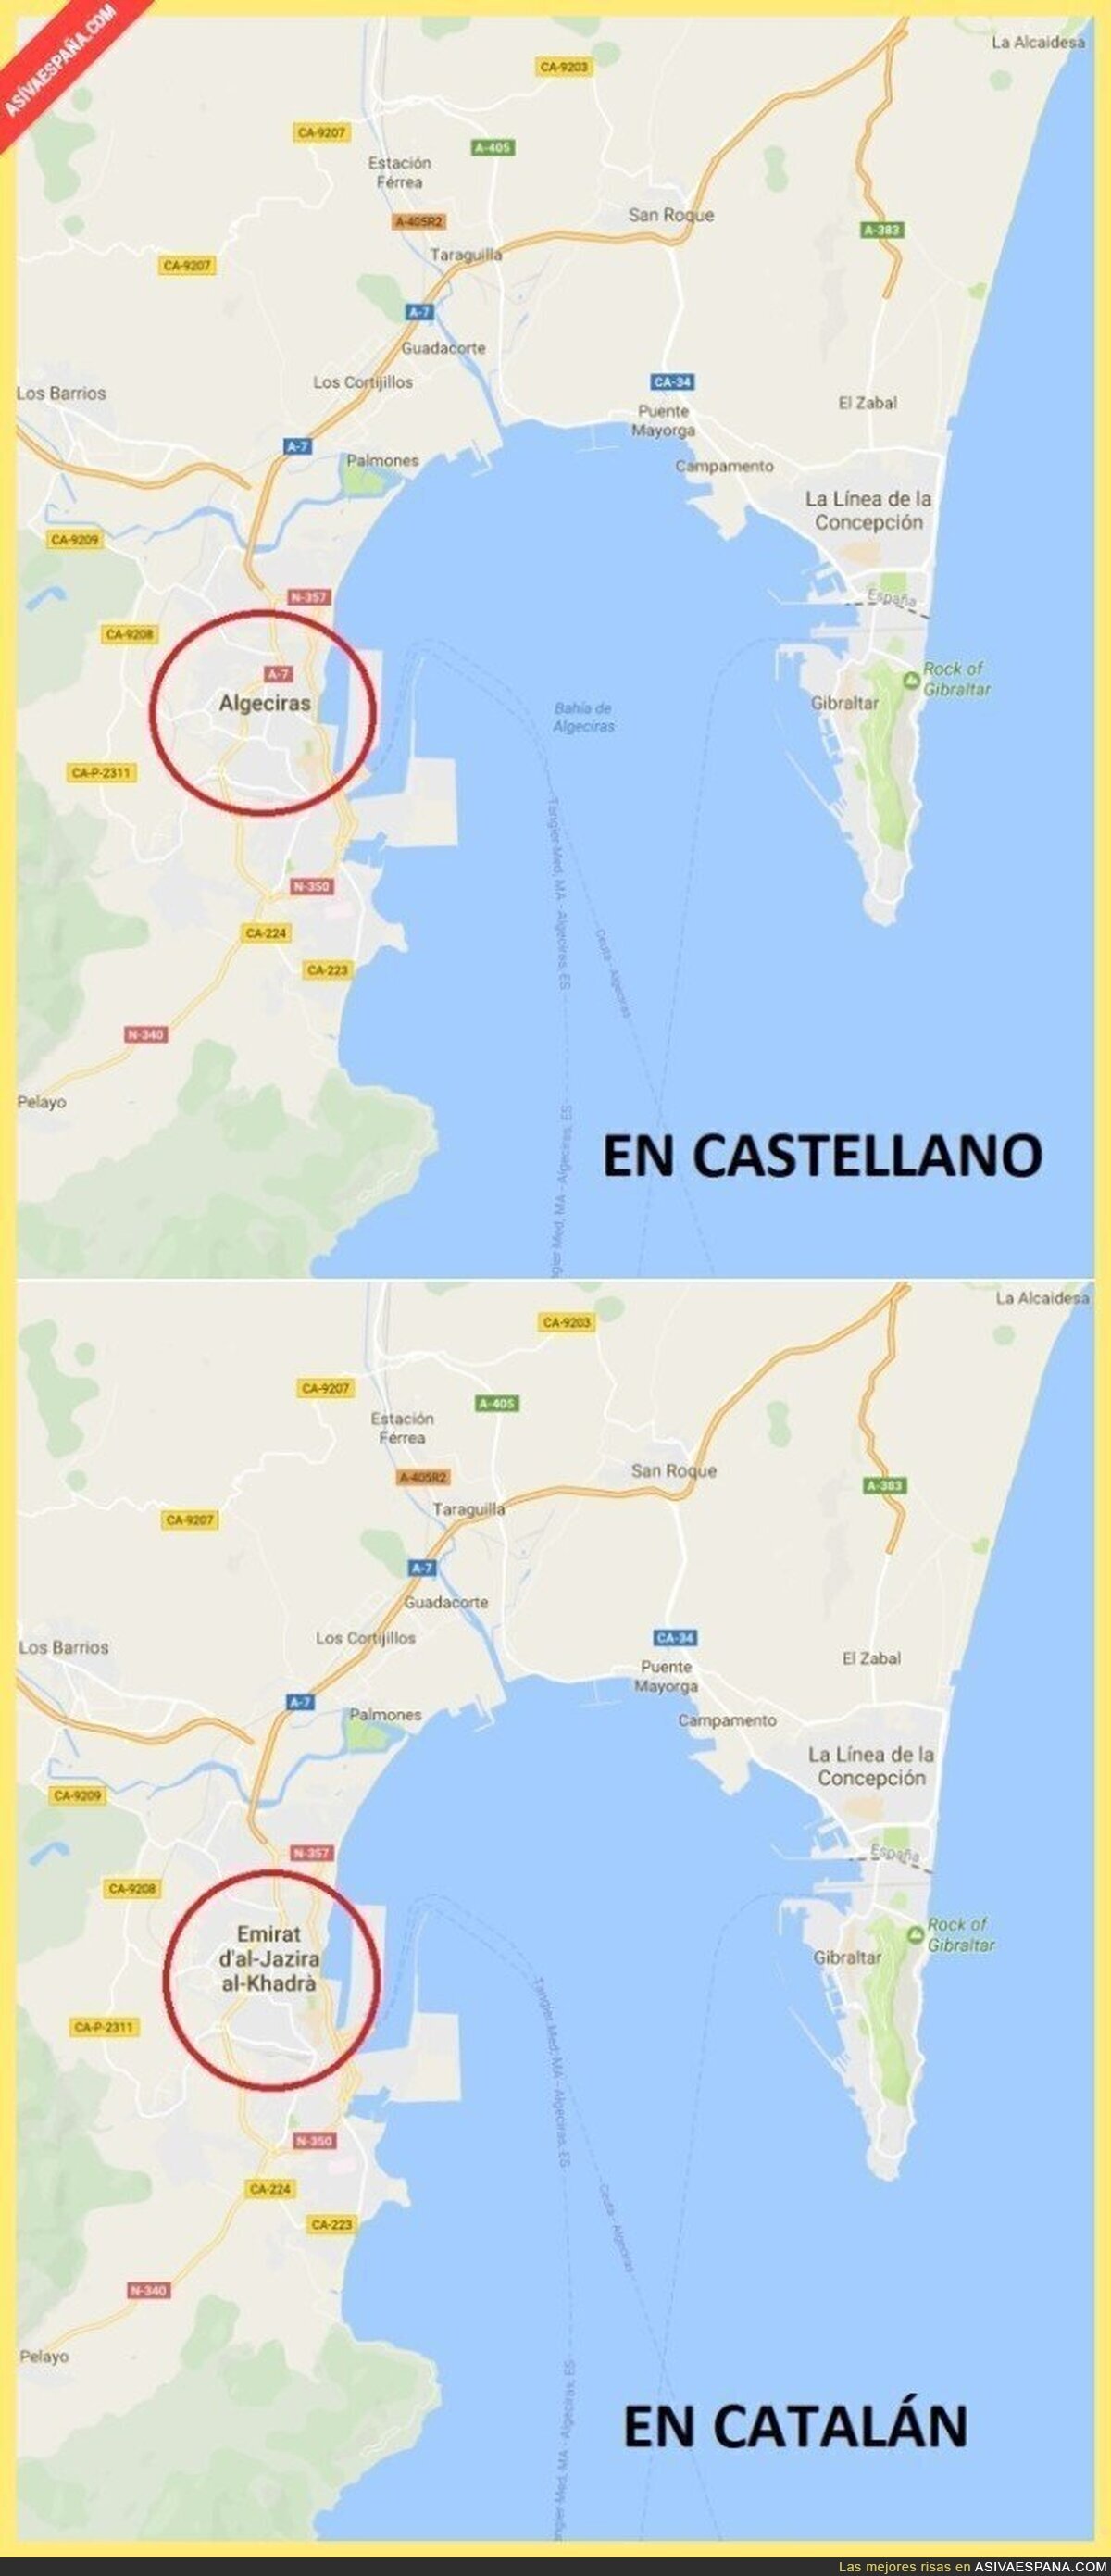 Así traduce Google Maps "Algeciras" en catalán